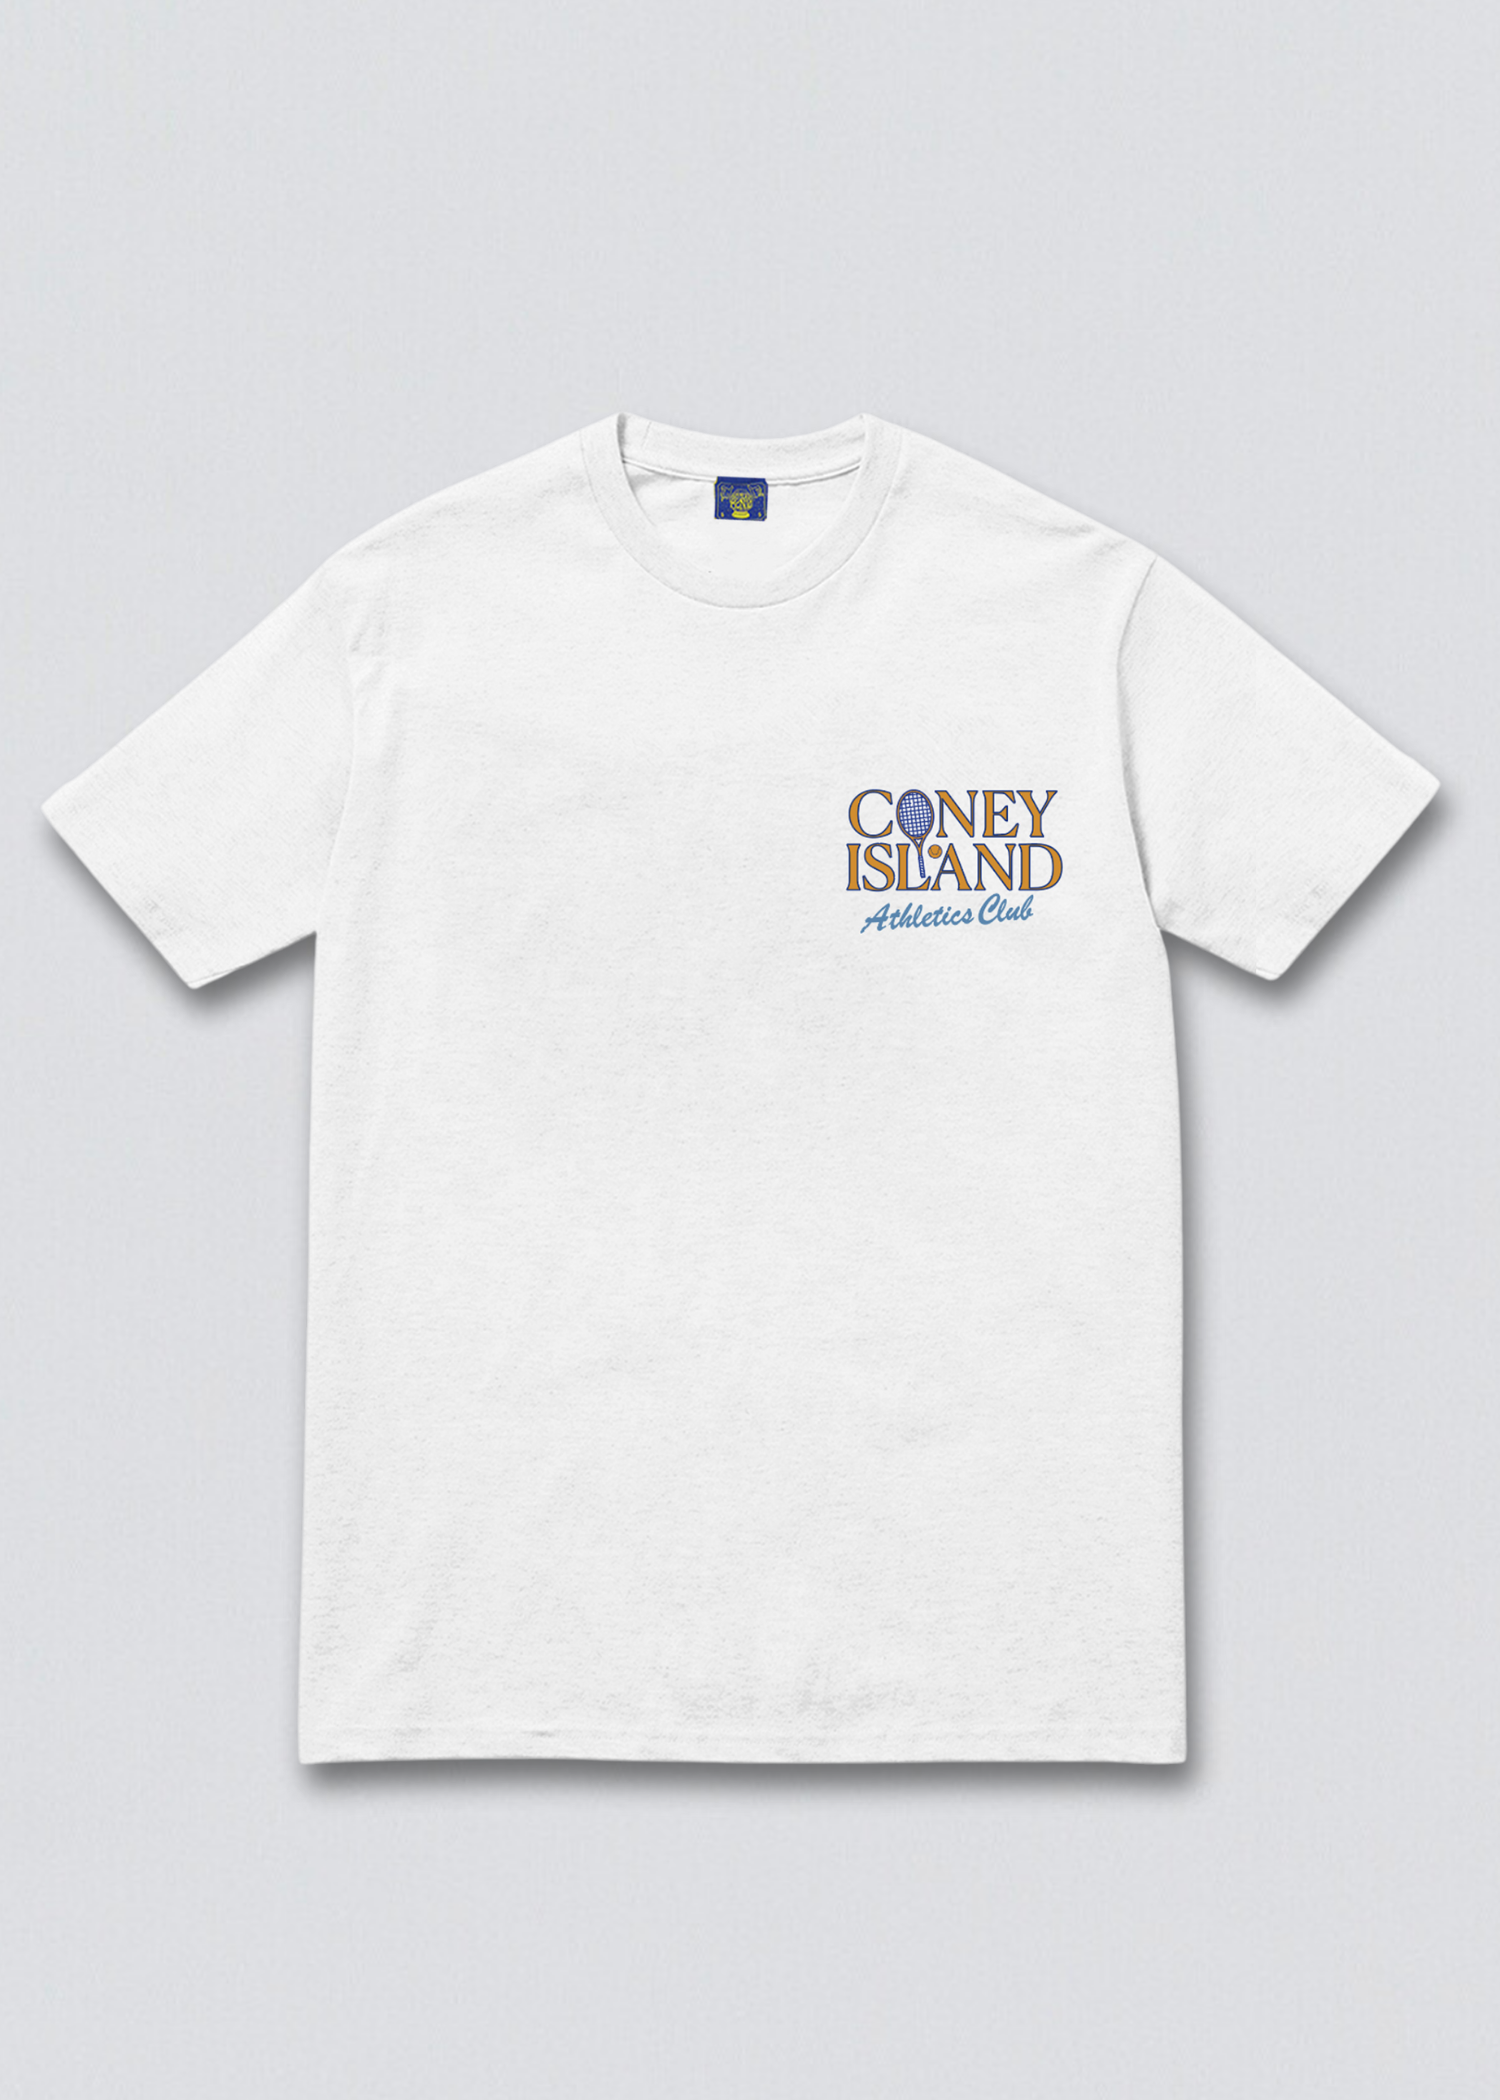 Coney Island Athletics Club Graphic Short Sleeve Tee